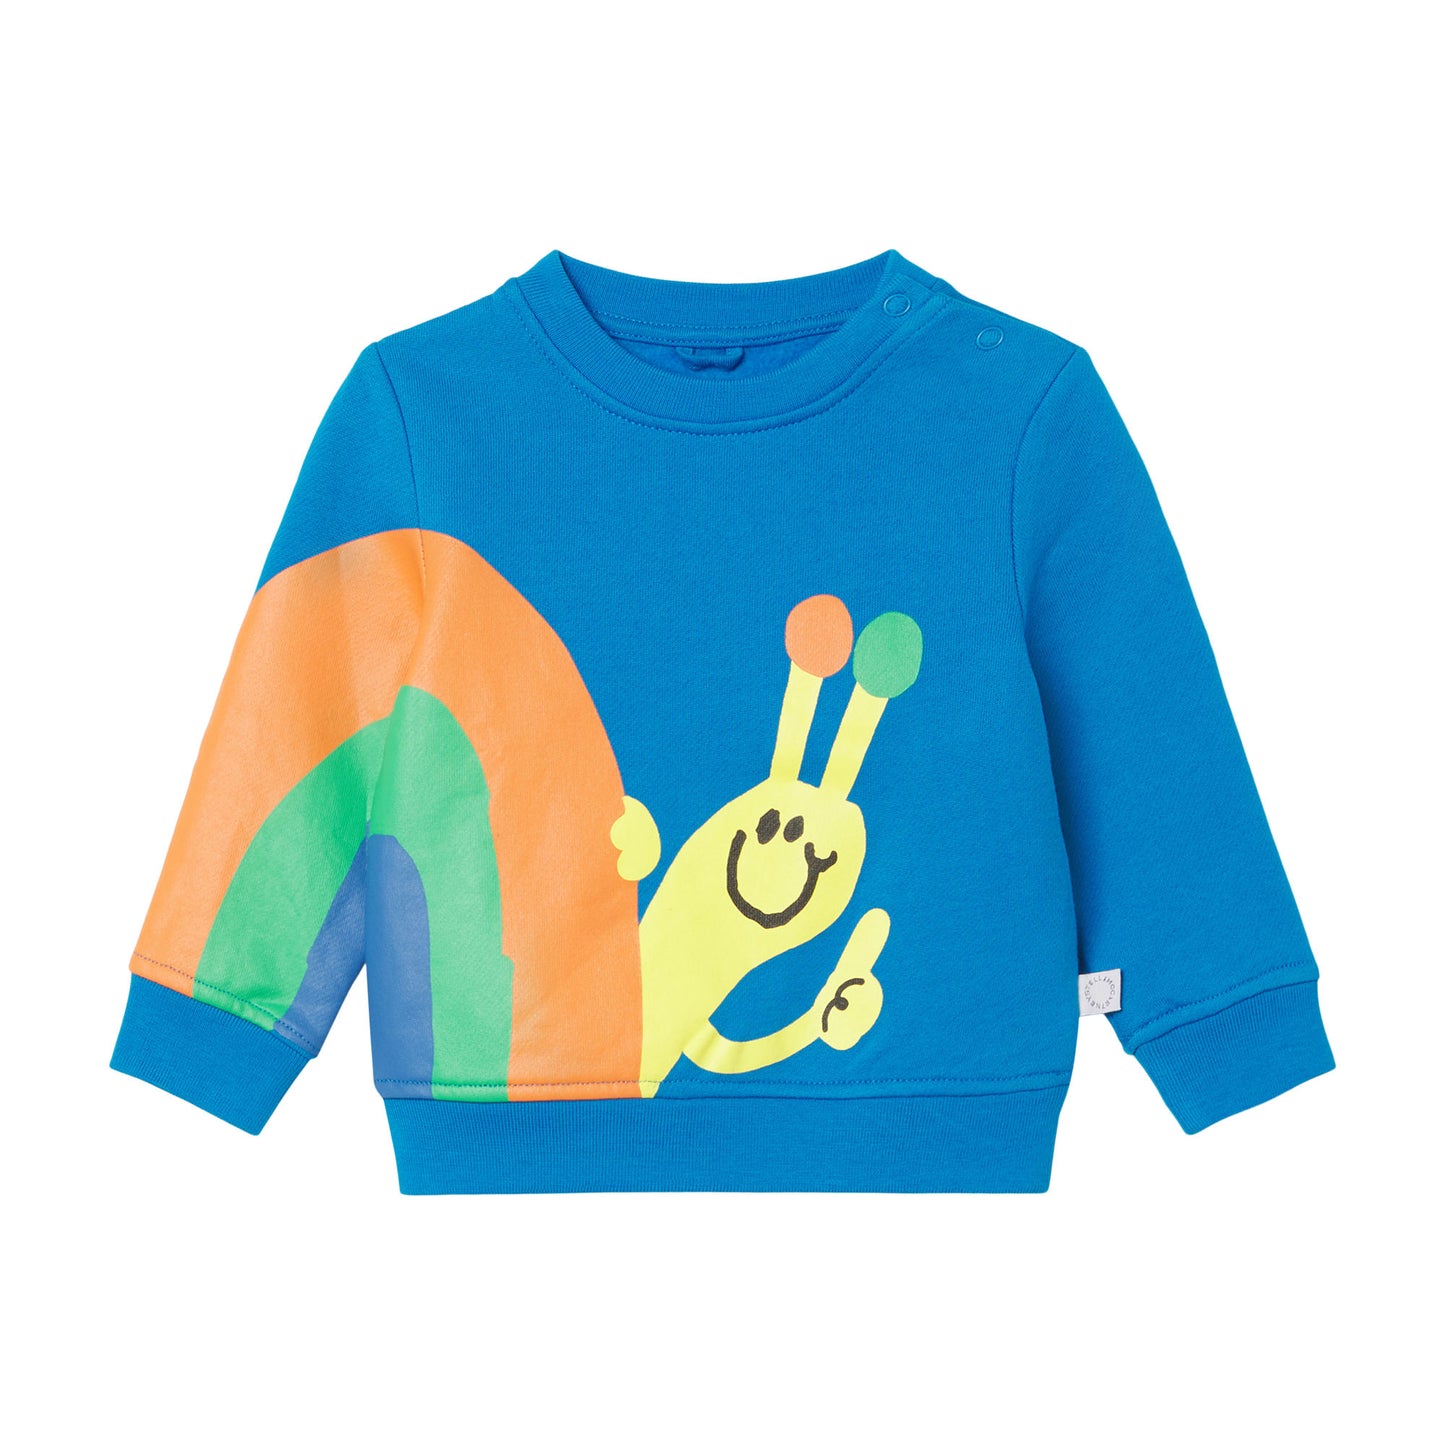 Stella McCartney Baby Boy Sweater Suit w/ Snail Print